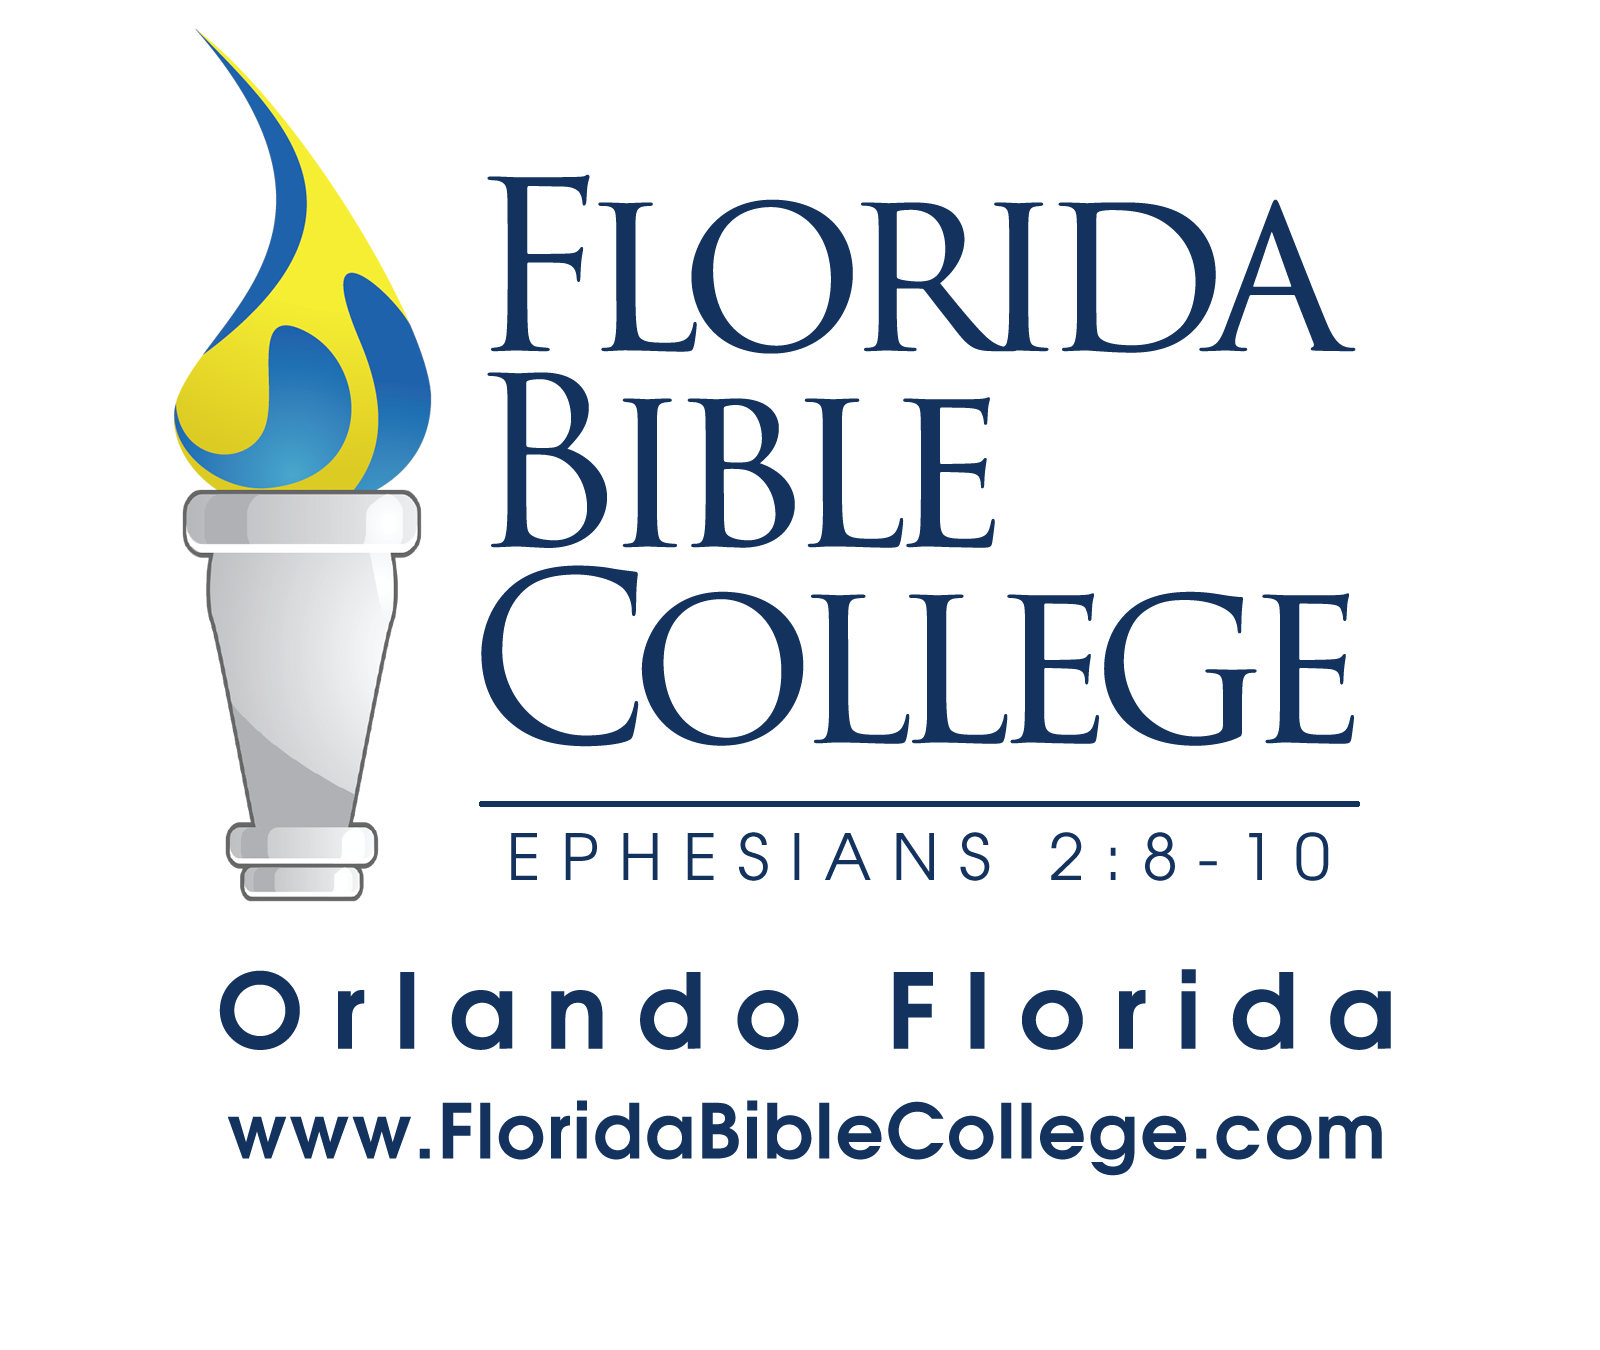 Florida Bible College Orlando, FL 32810